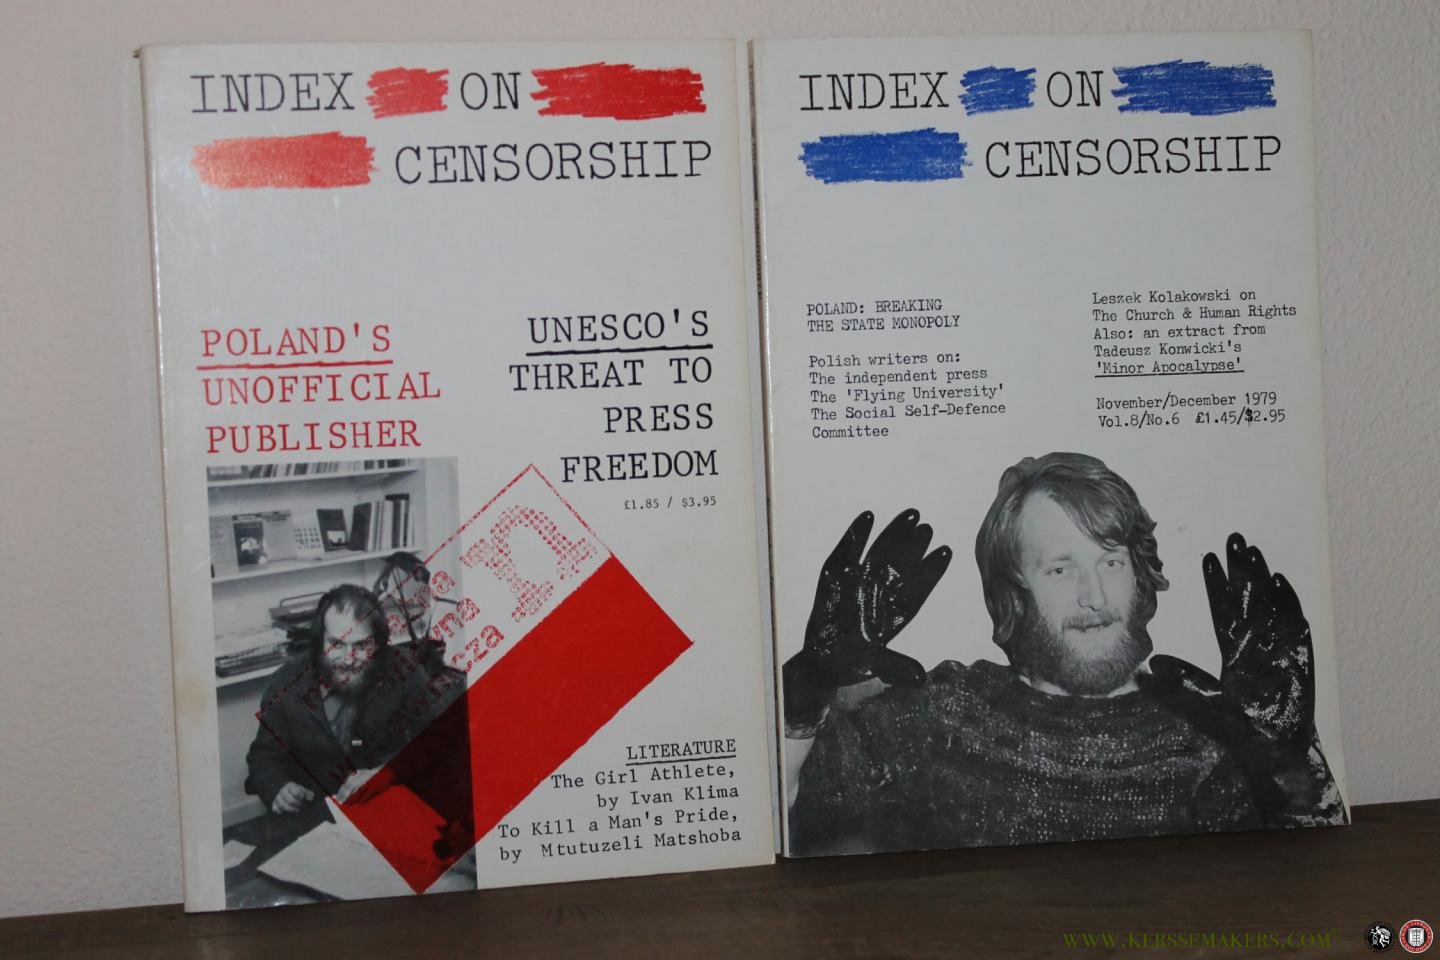 LUNGHI, Hugh (editor) - Index on Censorship: Volume 8, no. 6 + Volume 10, no. 1